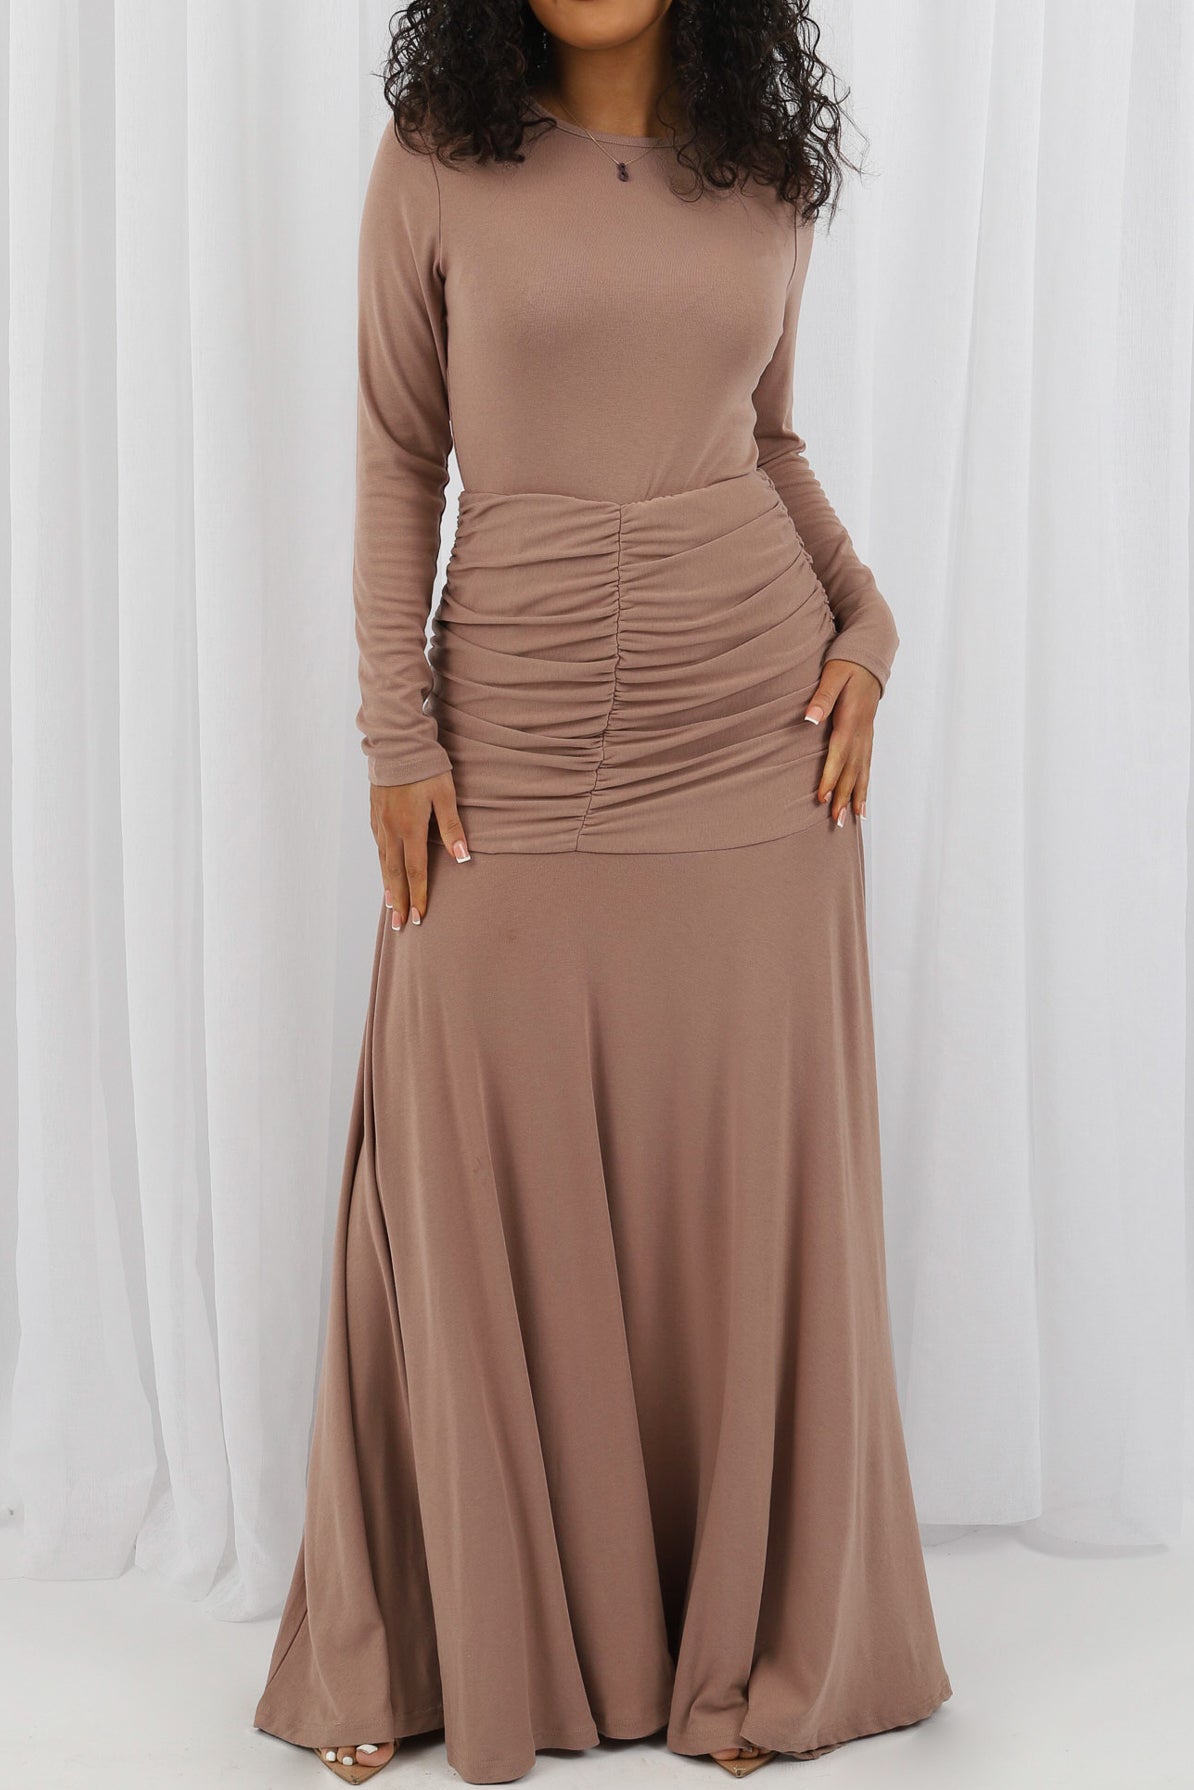 M7860Mocha-dress-abaya